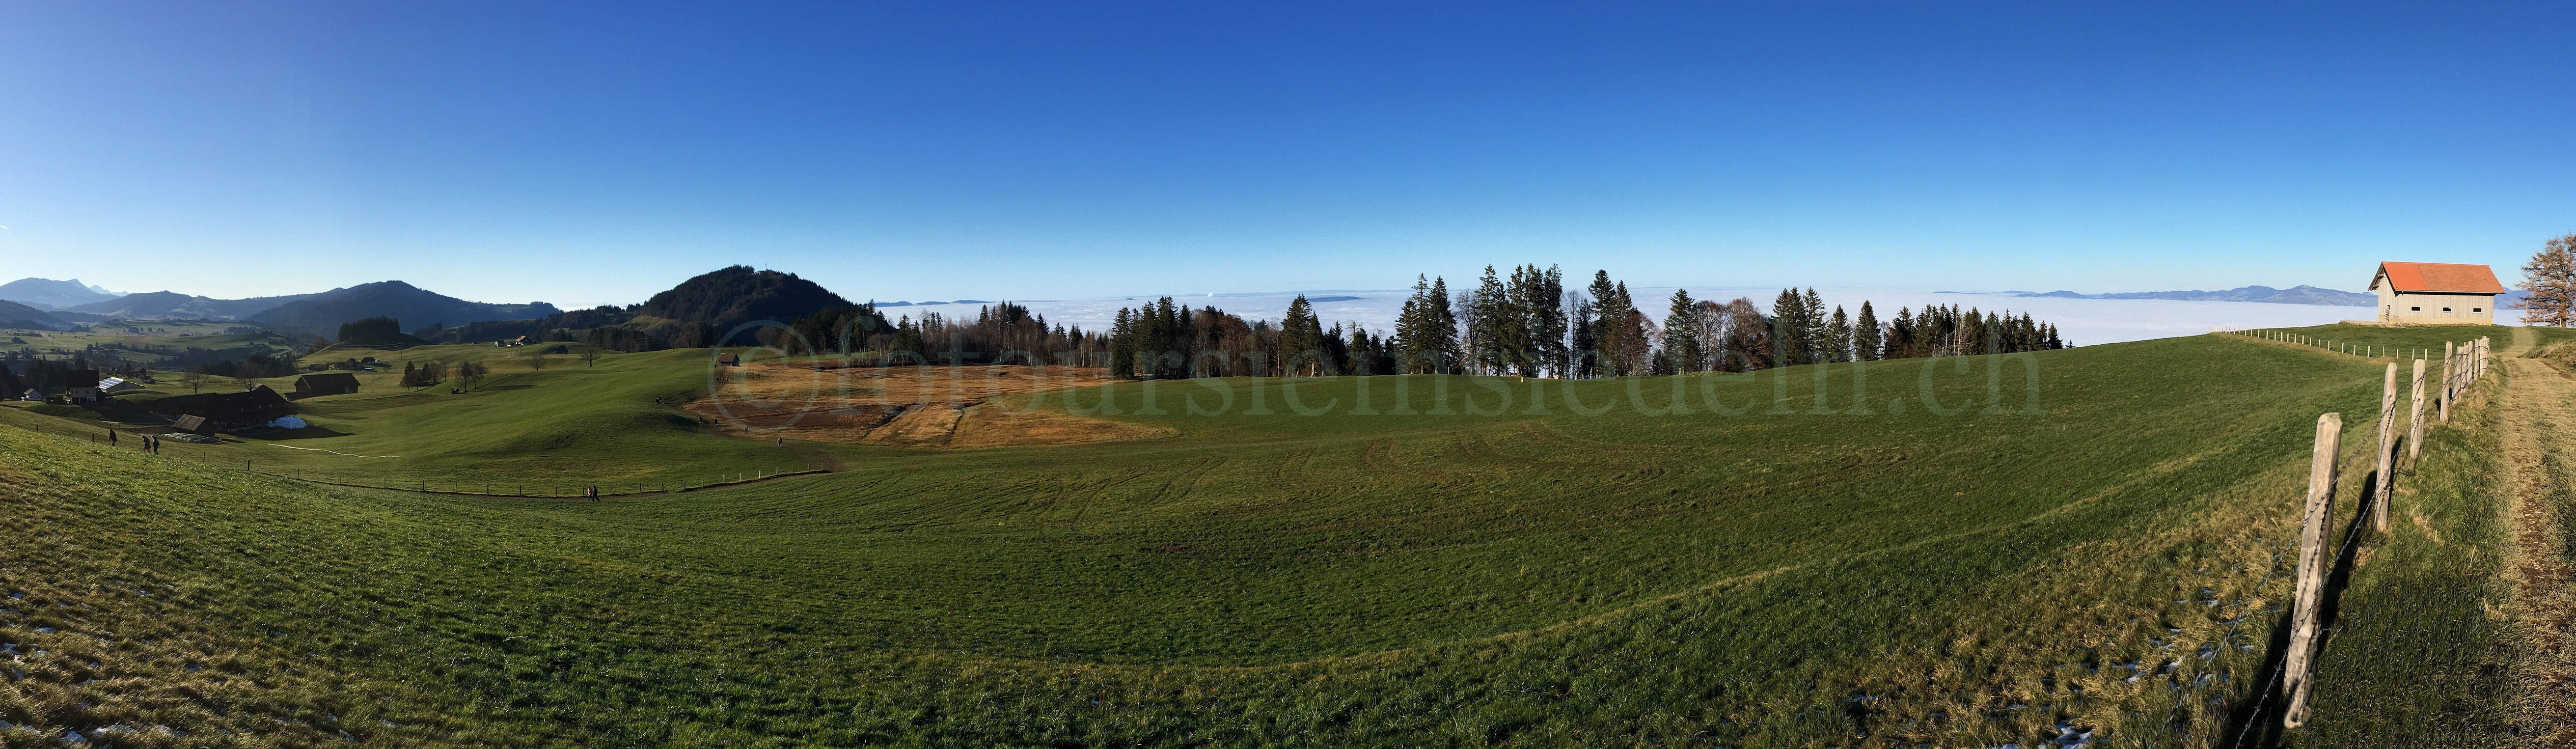 Panorama Einsiedeln 2020 027